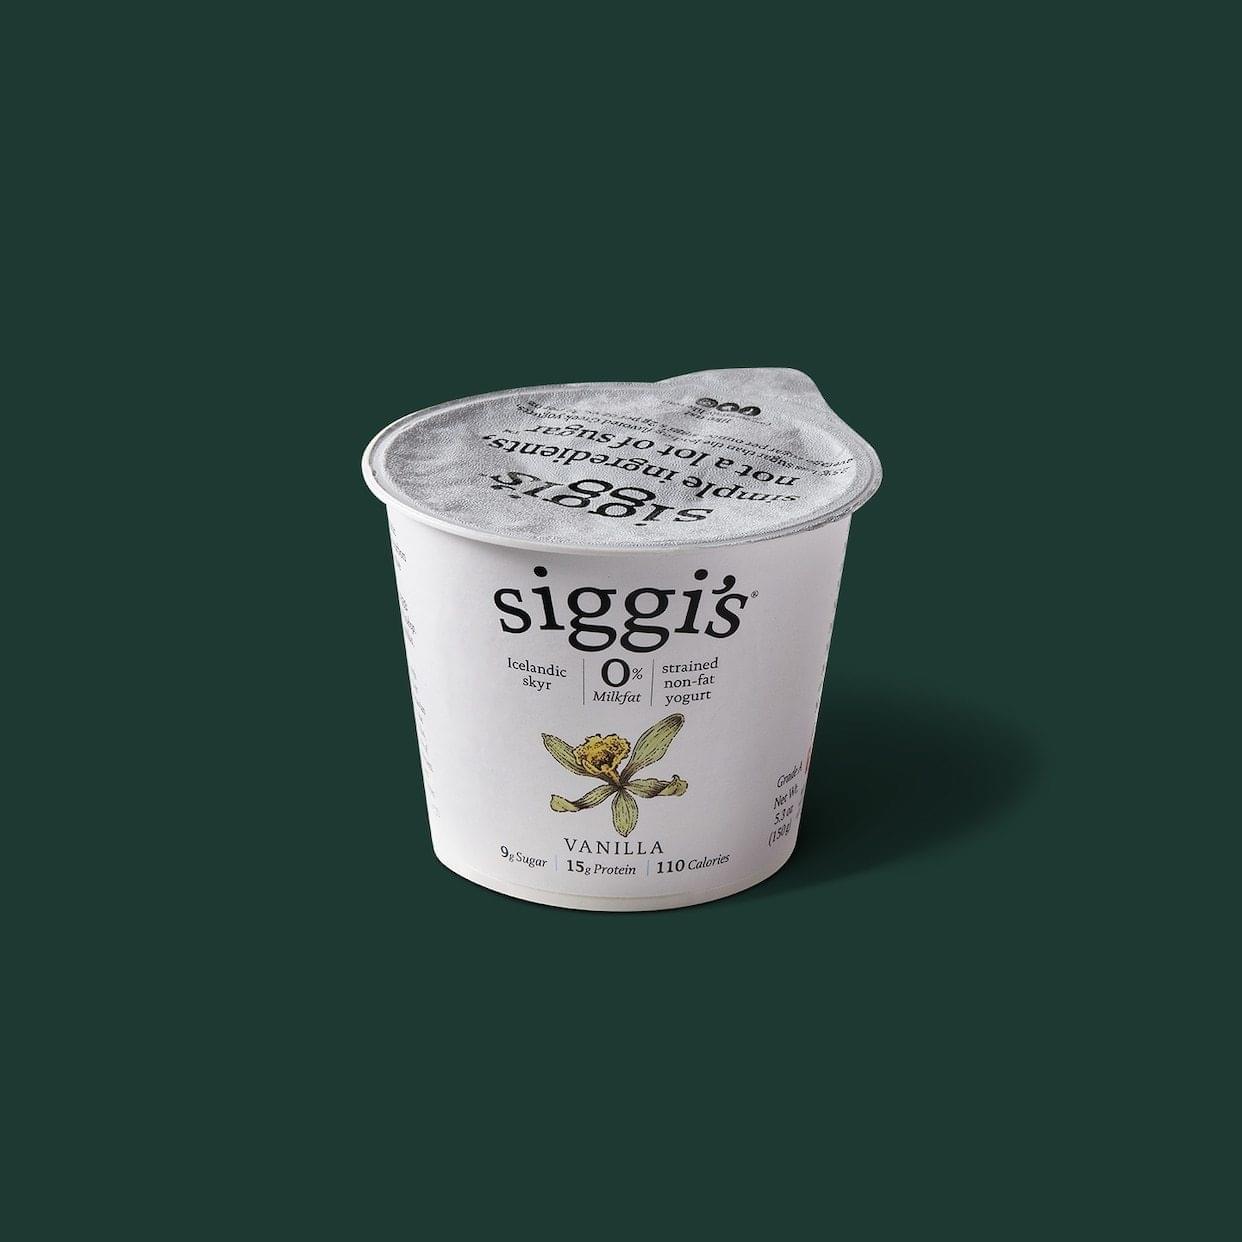 Starbucks Siggi's Vanilla Yogurt Nutrition Facts